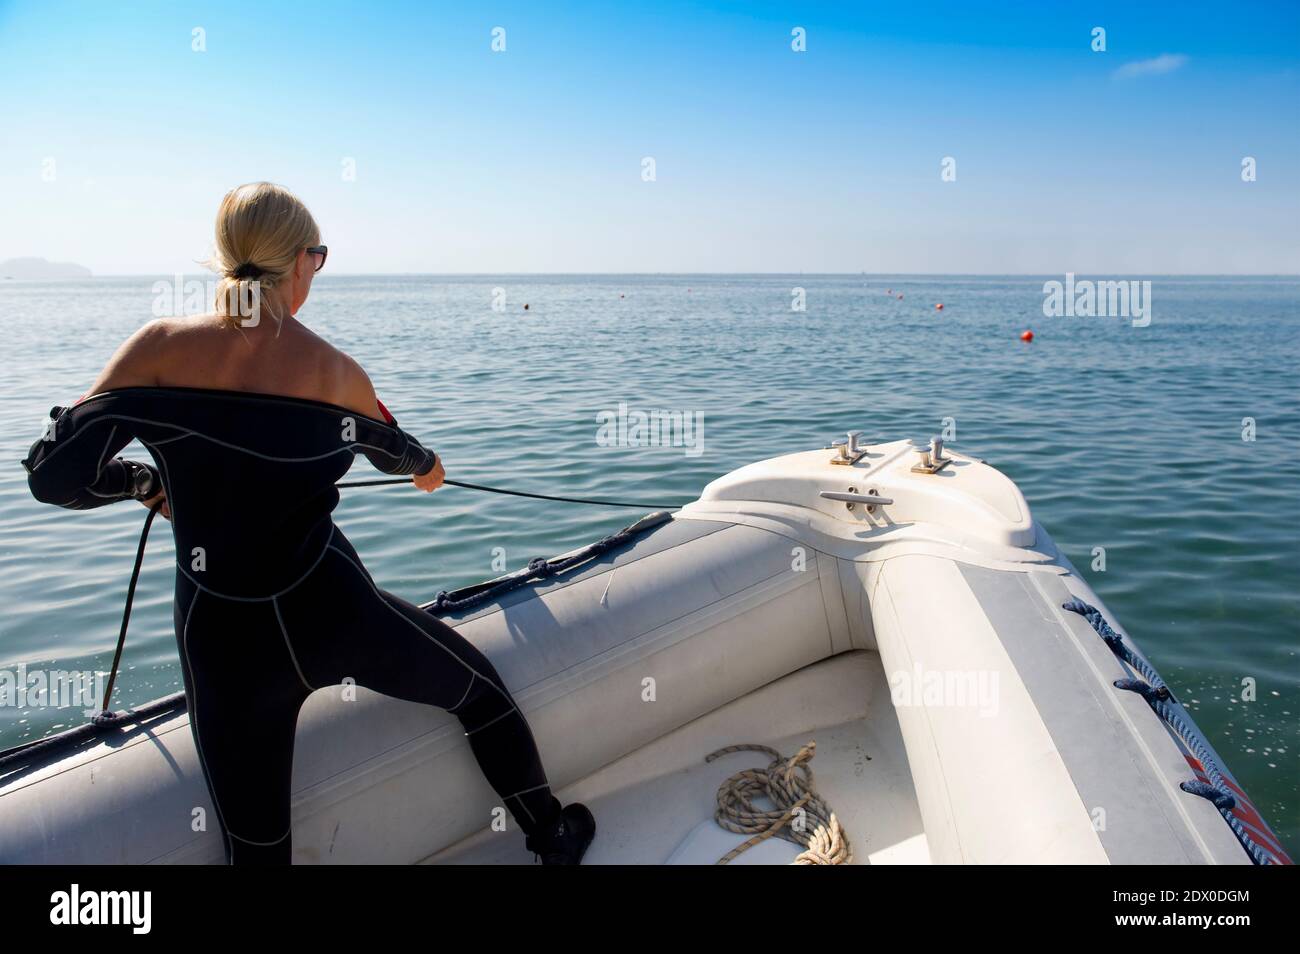 Scuba diver working on a inflatable boat. Baia (Baiae), Campi Flegrei (Phlegraean Fields), Naples, Campania, Italy Stock Photo